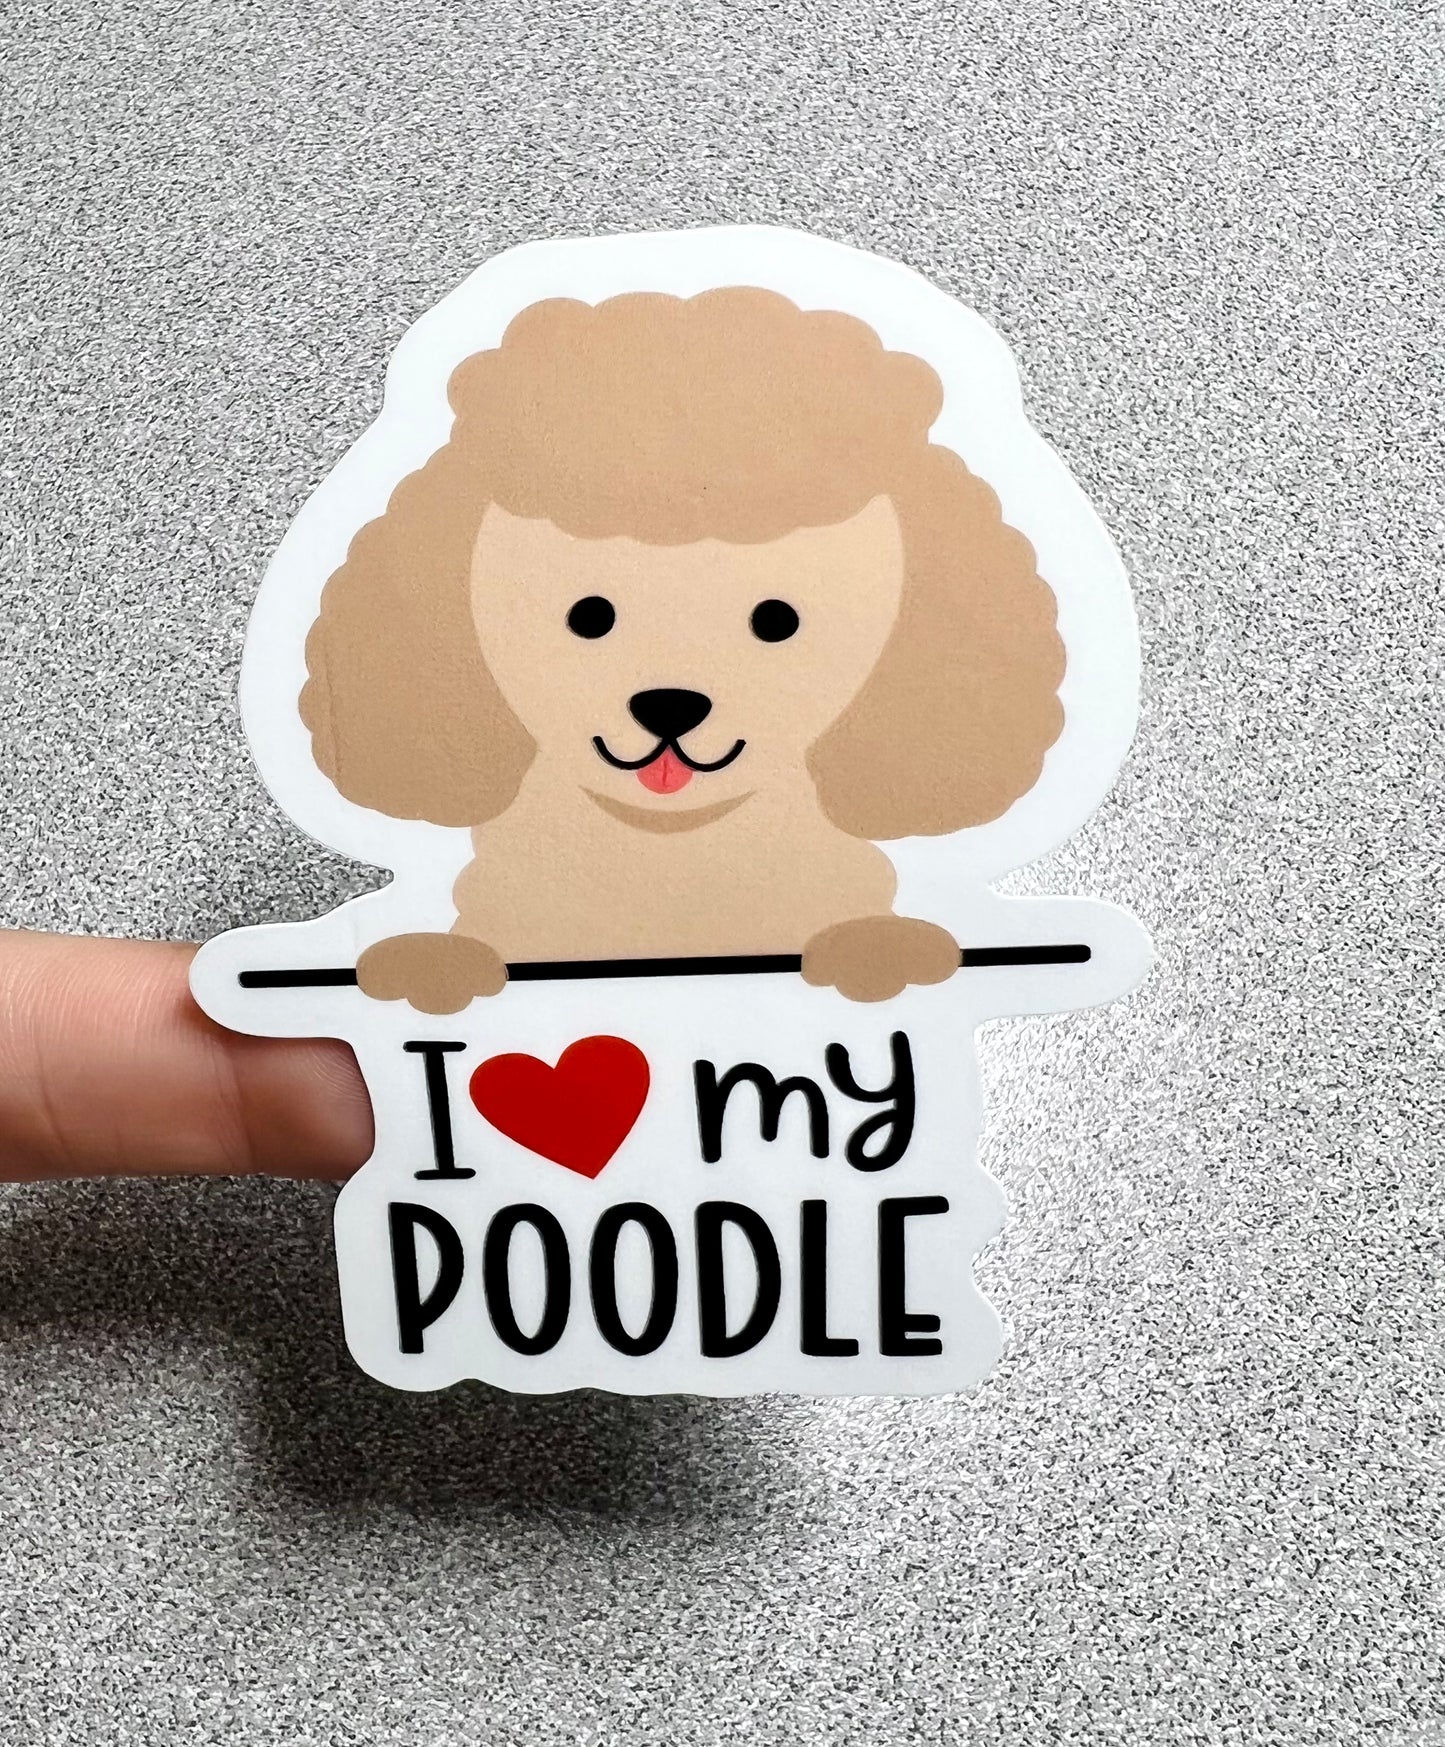 Poodle Love Vinyl Sticker